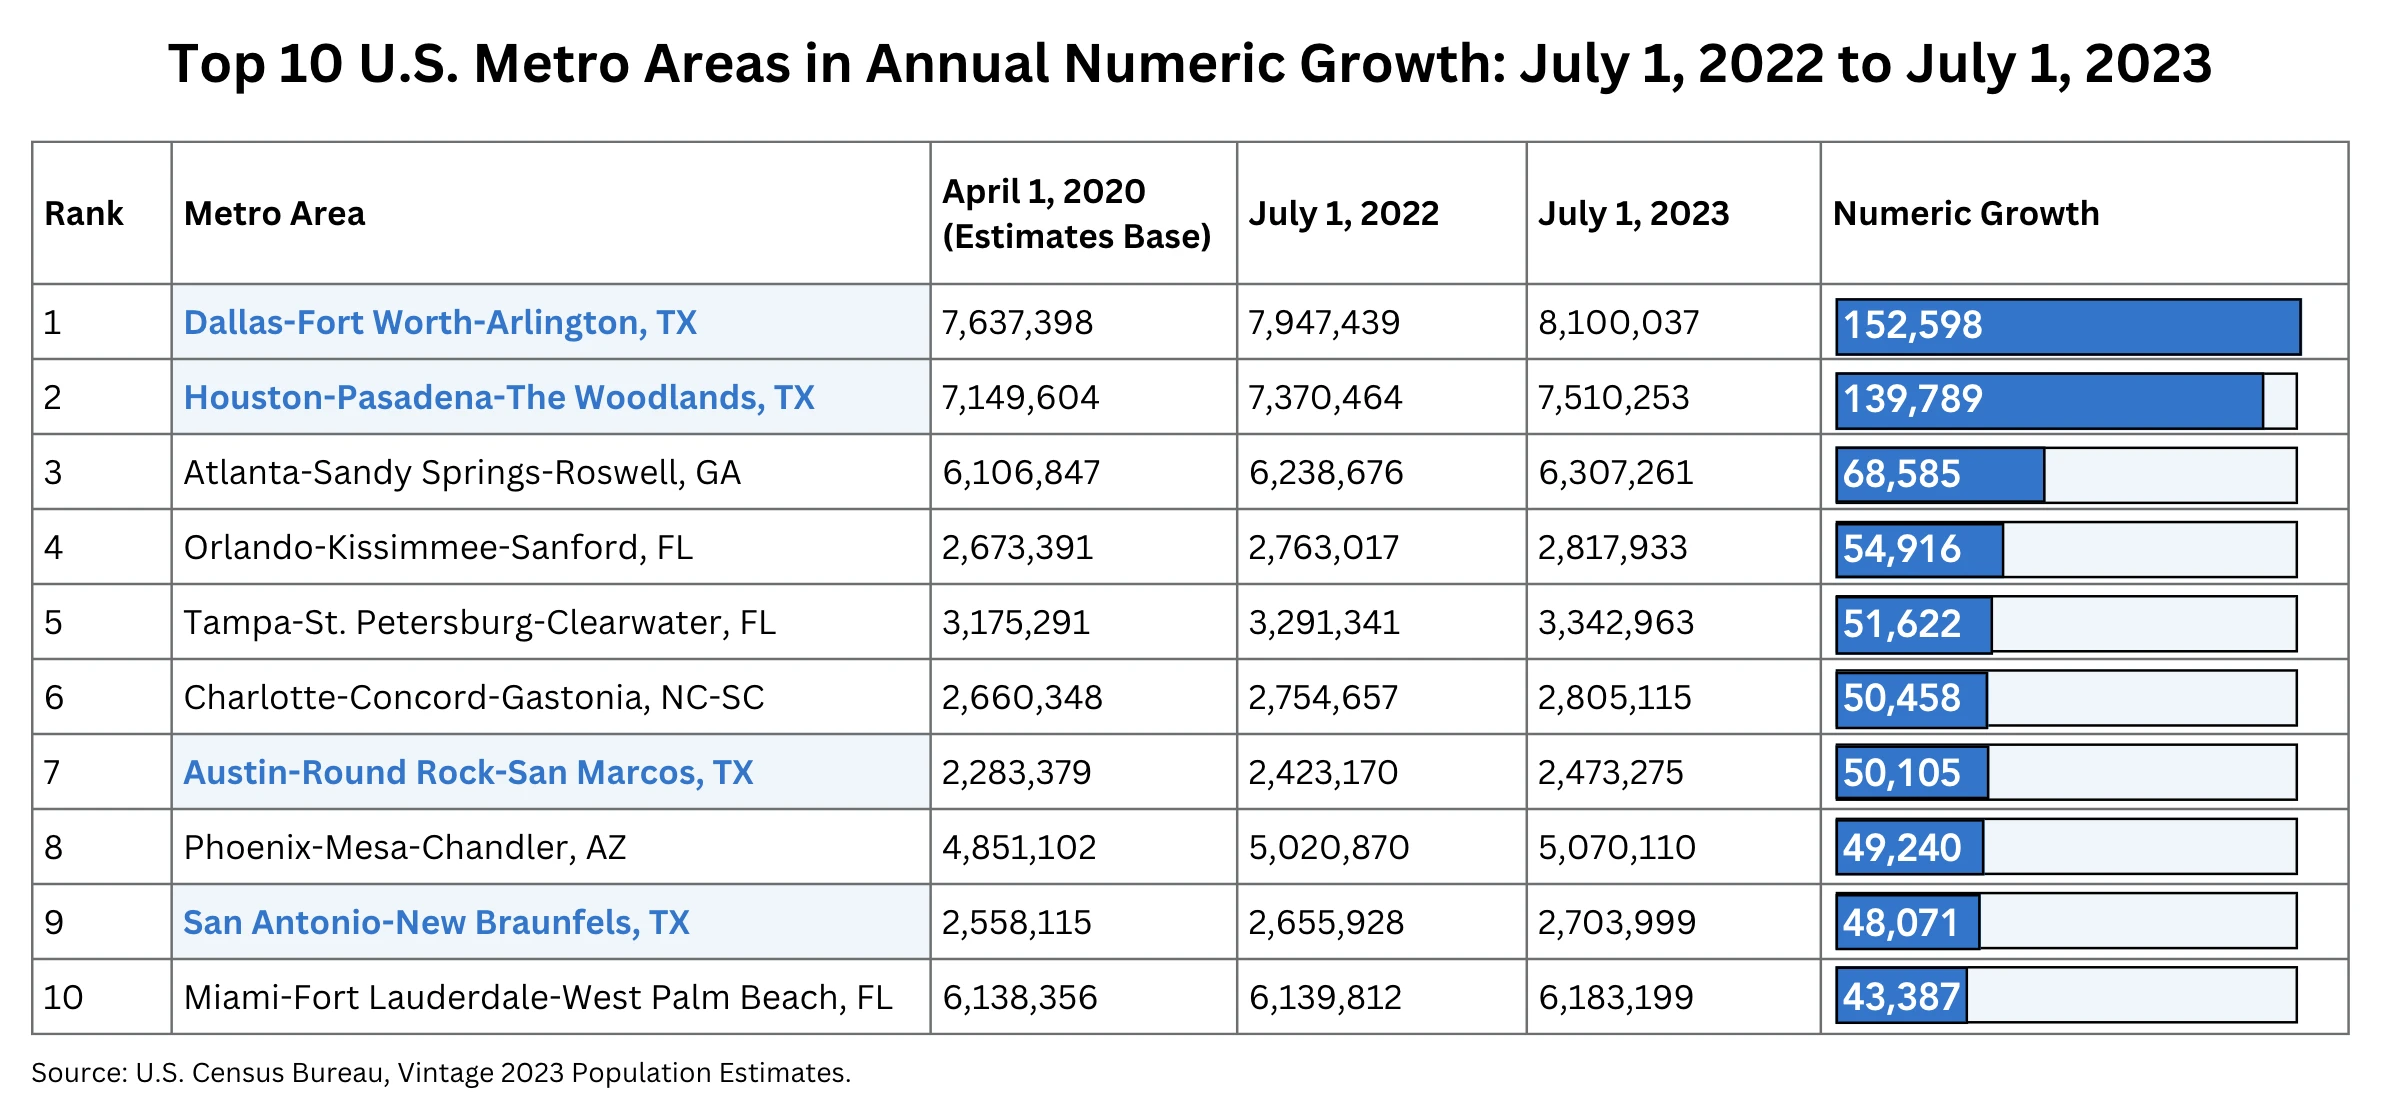 Top 10 U.S. Metro Areas in Annual Numeric Growth 2022-2023